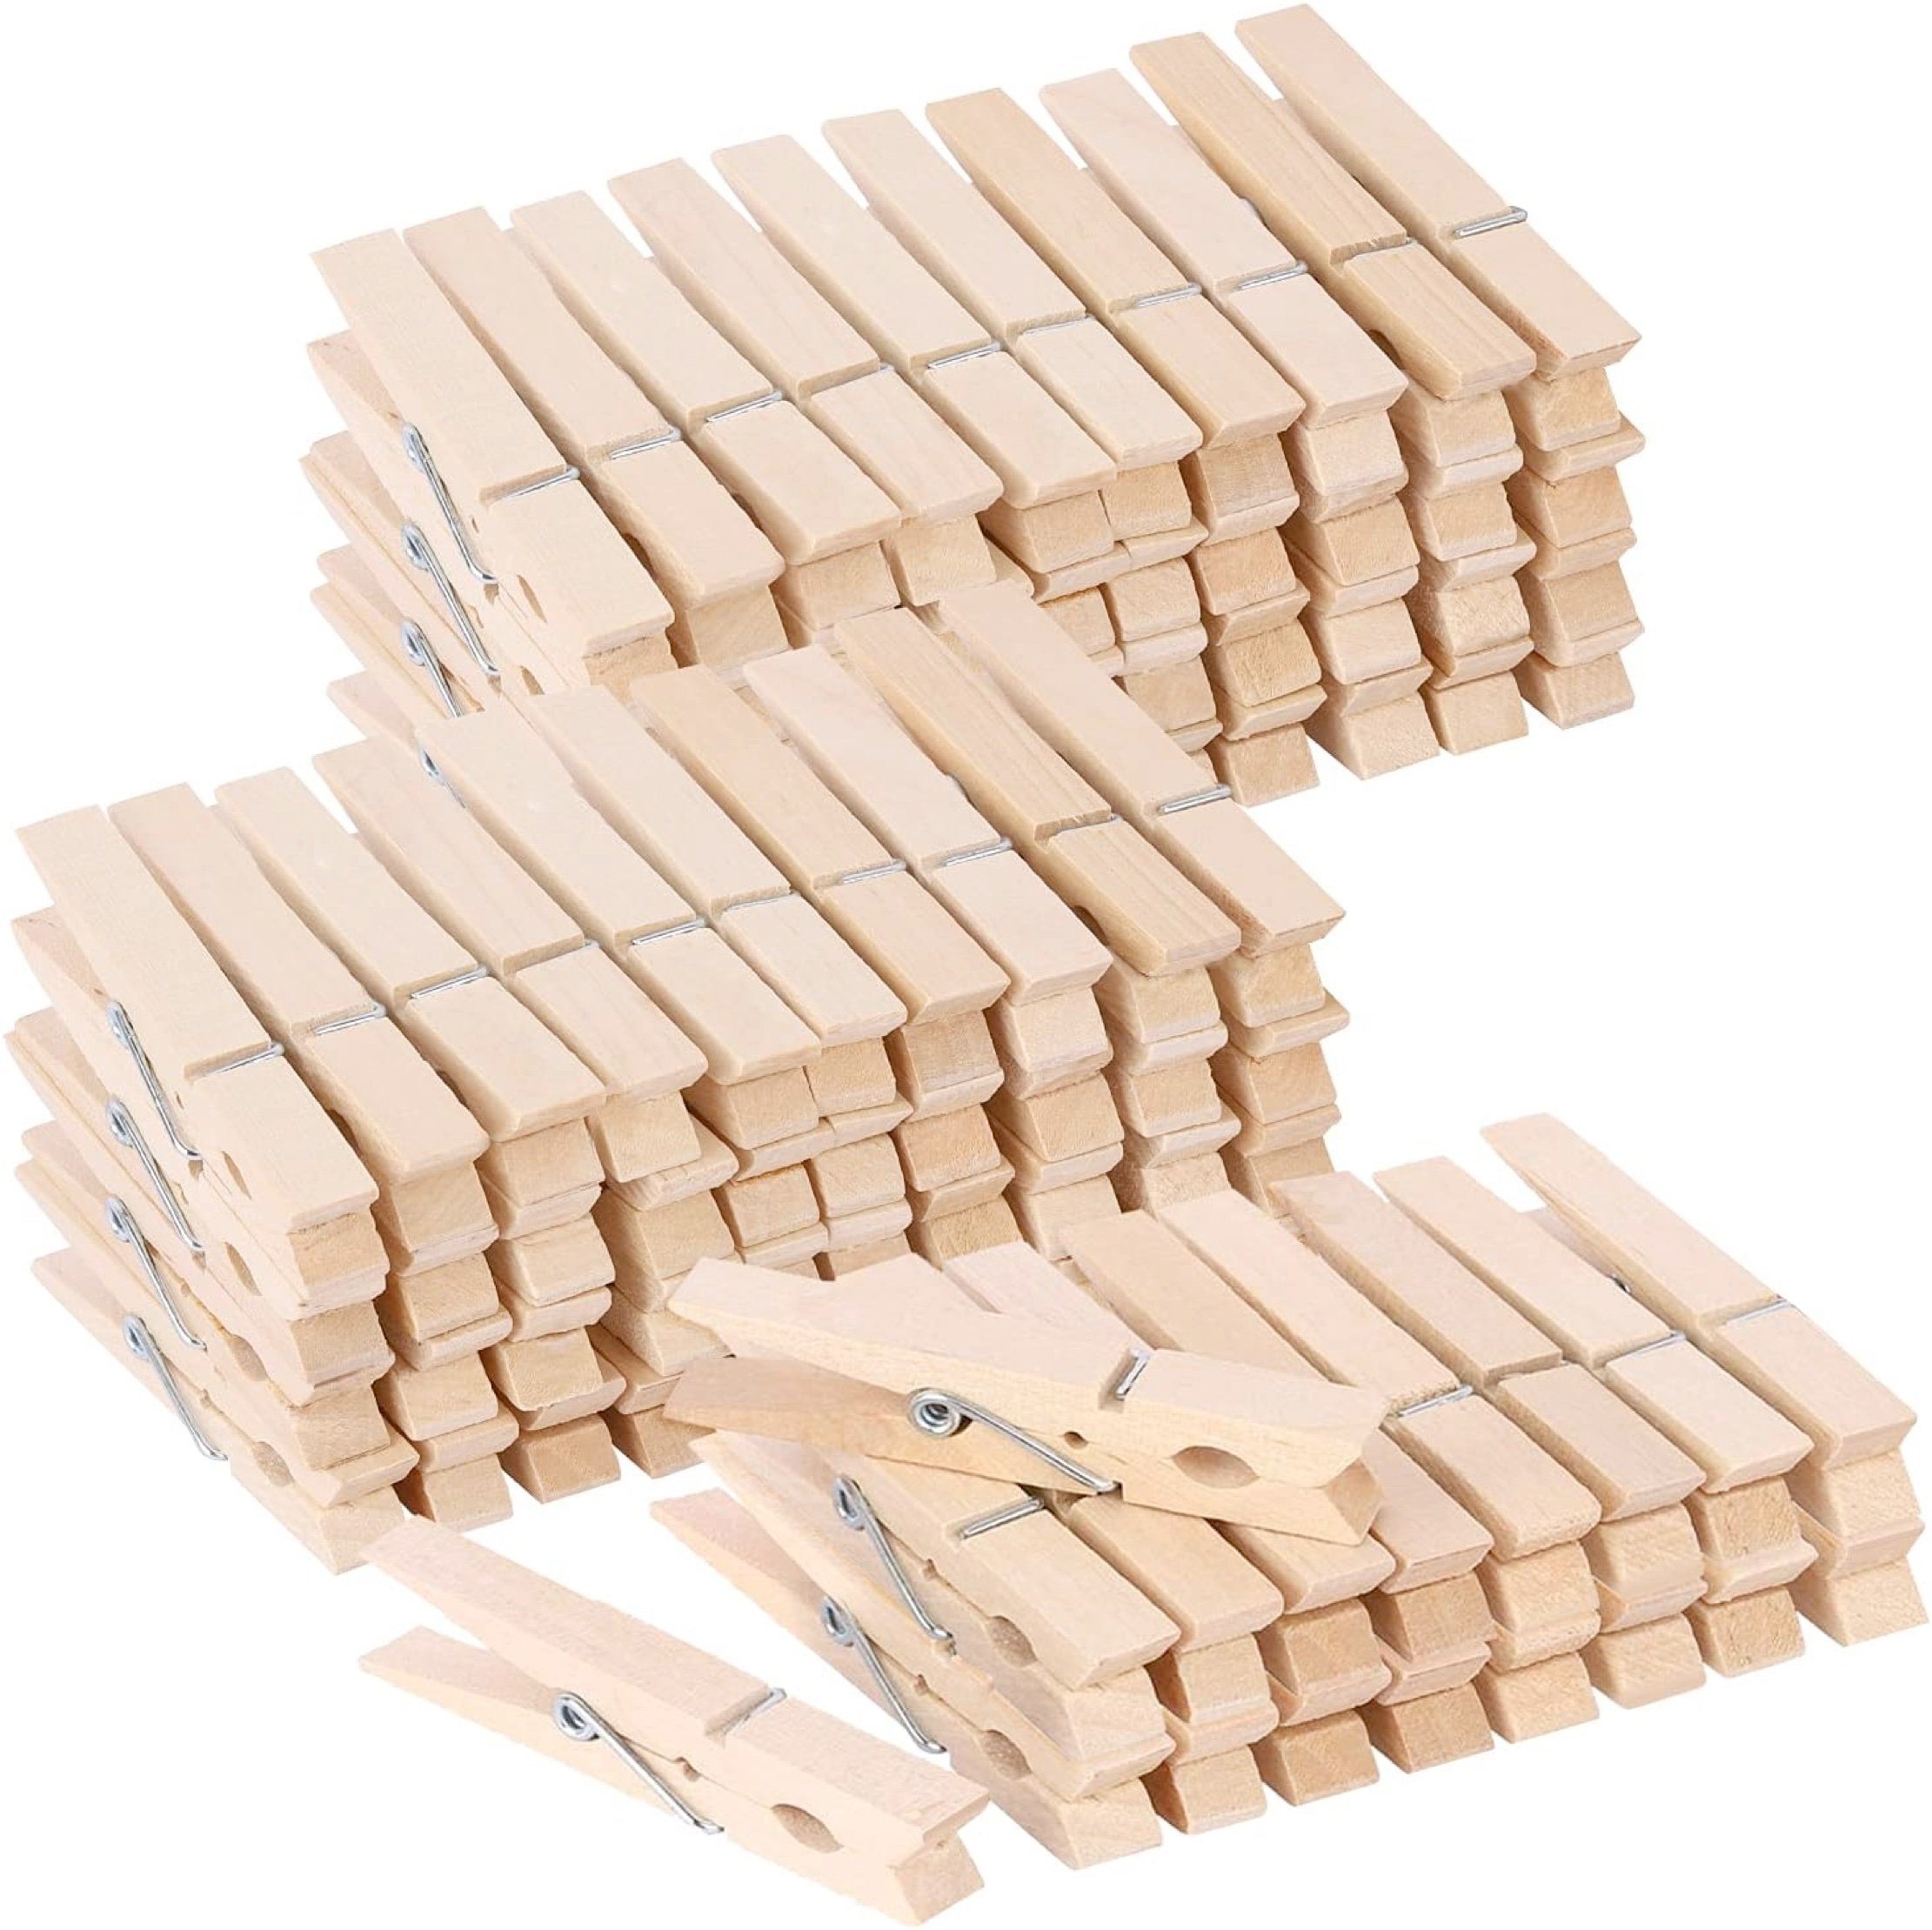 Everhomely® Wäscheklammern 160 Klammern aus echtem Holz - Holzklammern - Klammer Wäscheklammern, aus echtem Holz